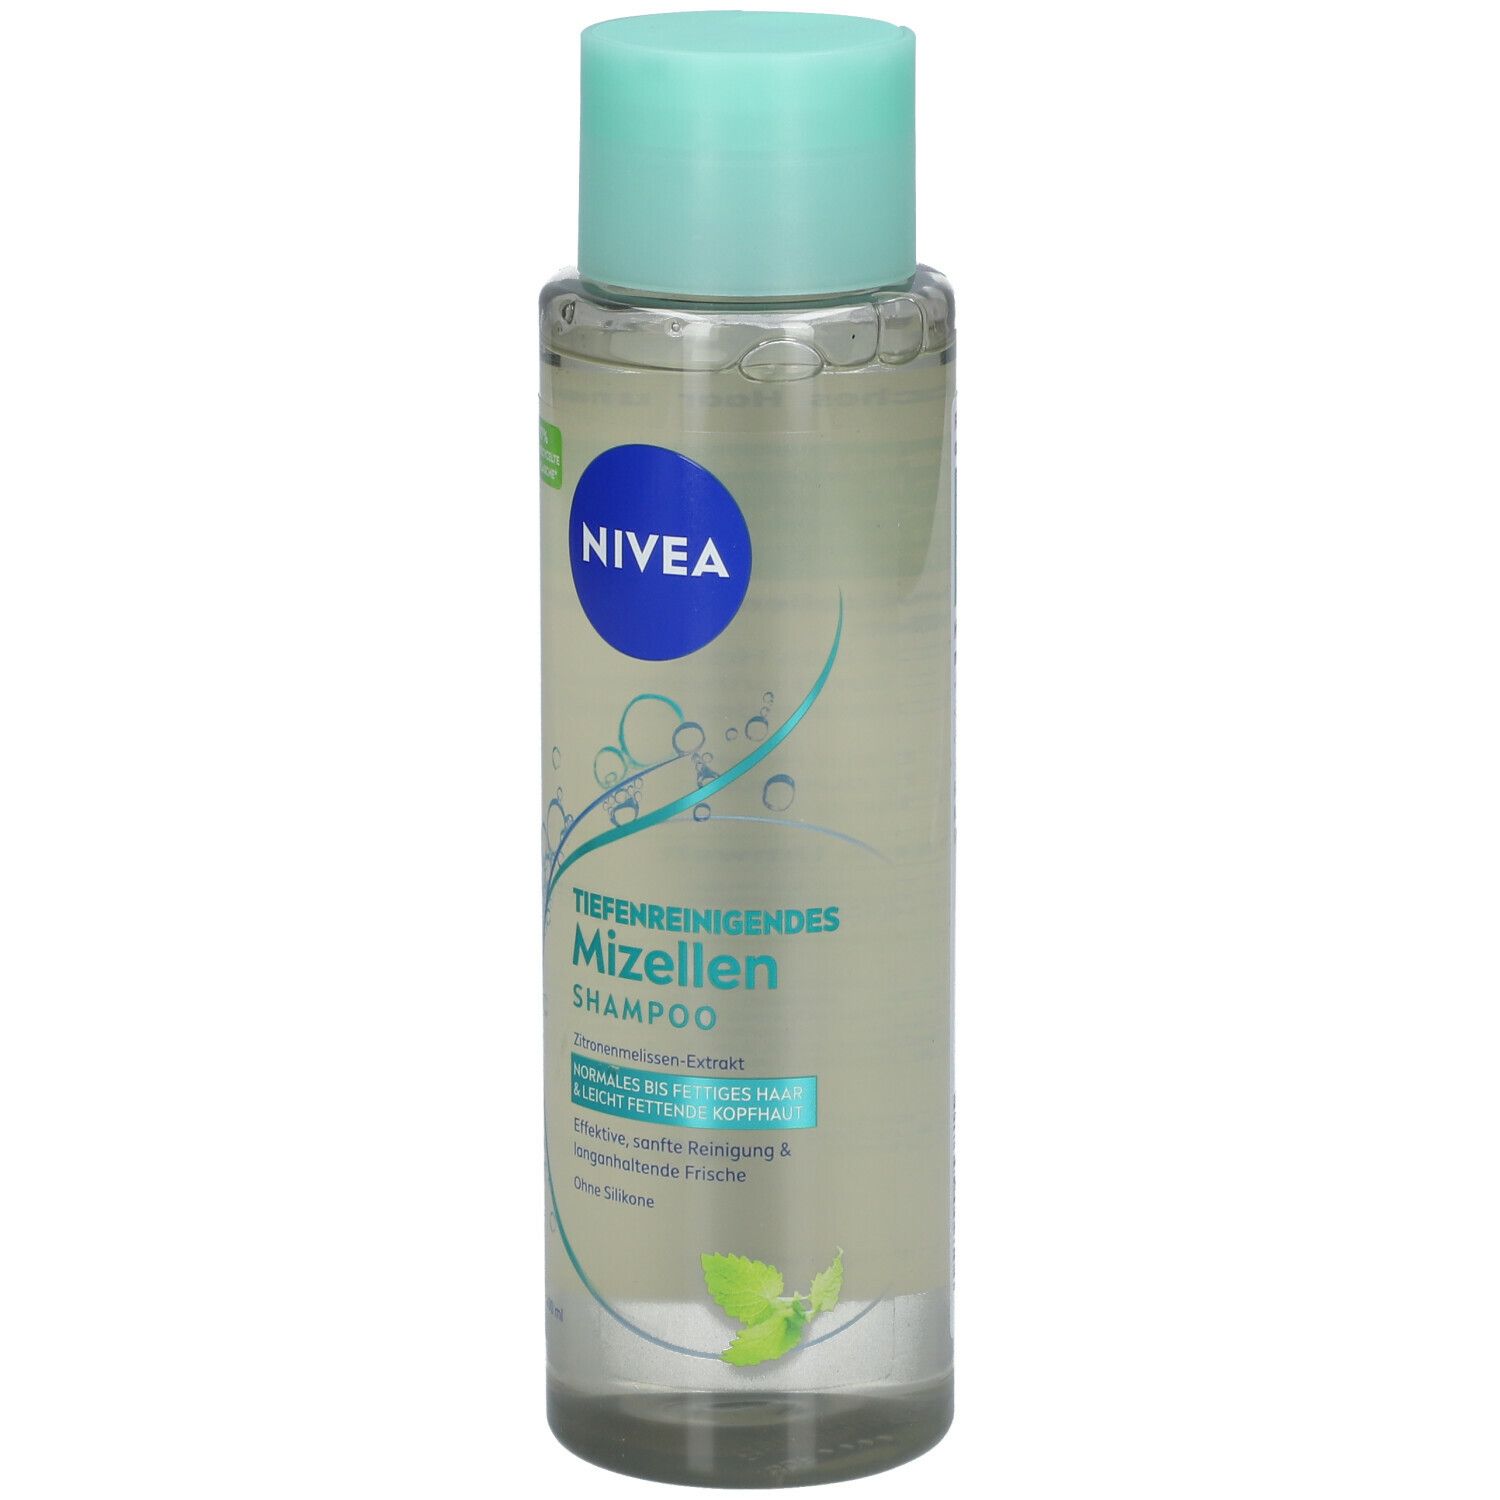 NIVEA® Hair Care Tiefenreinigendes Mizellen Shampoo